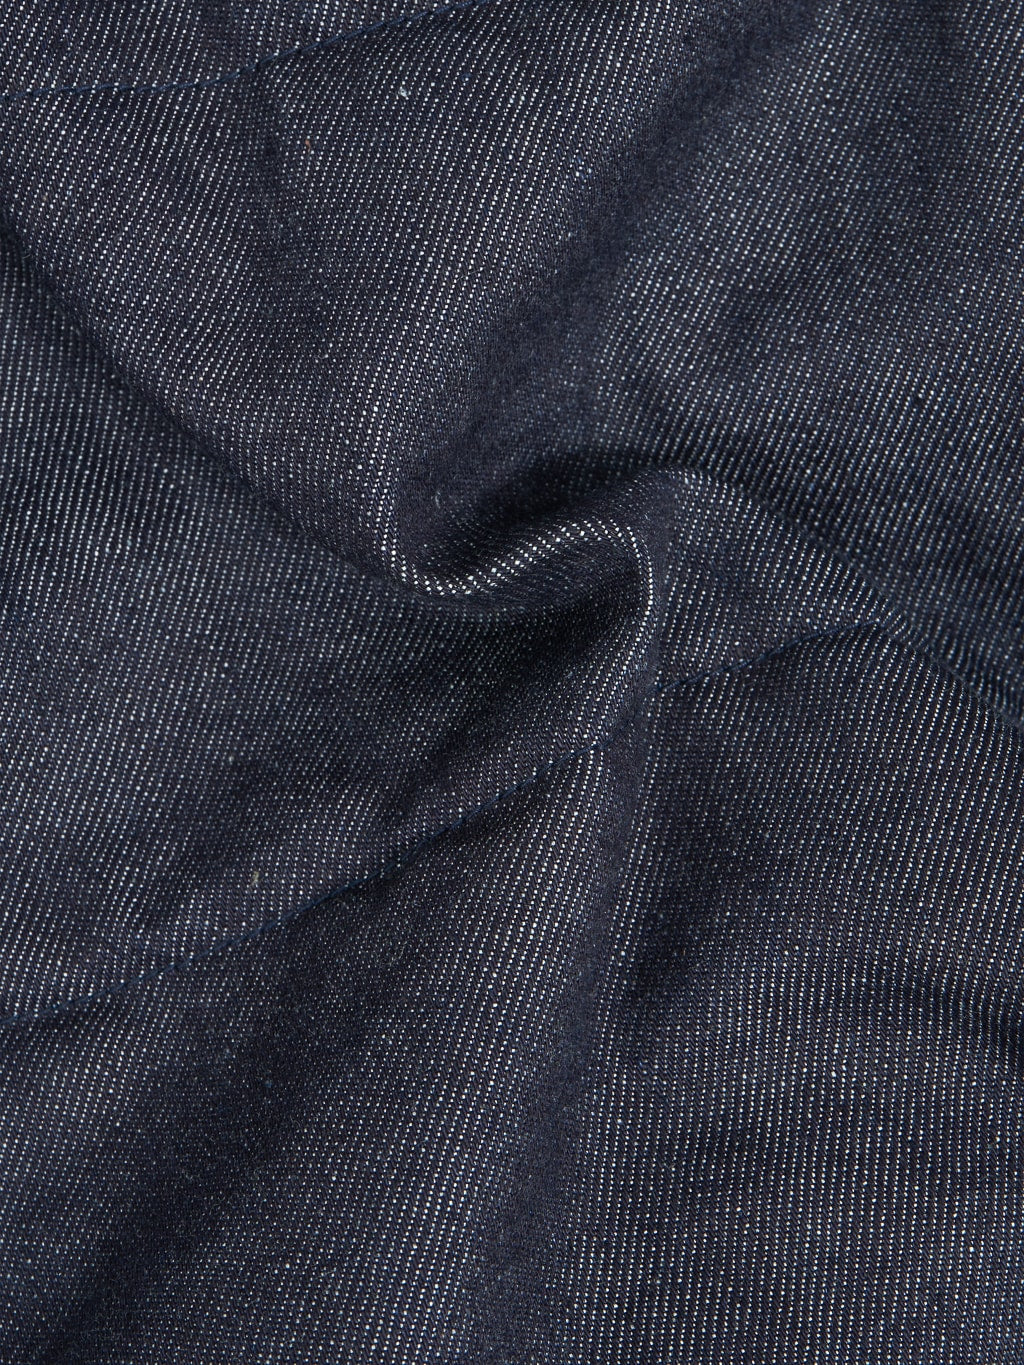 The Flat Head Denim Puffer Jacket texture